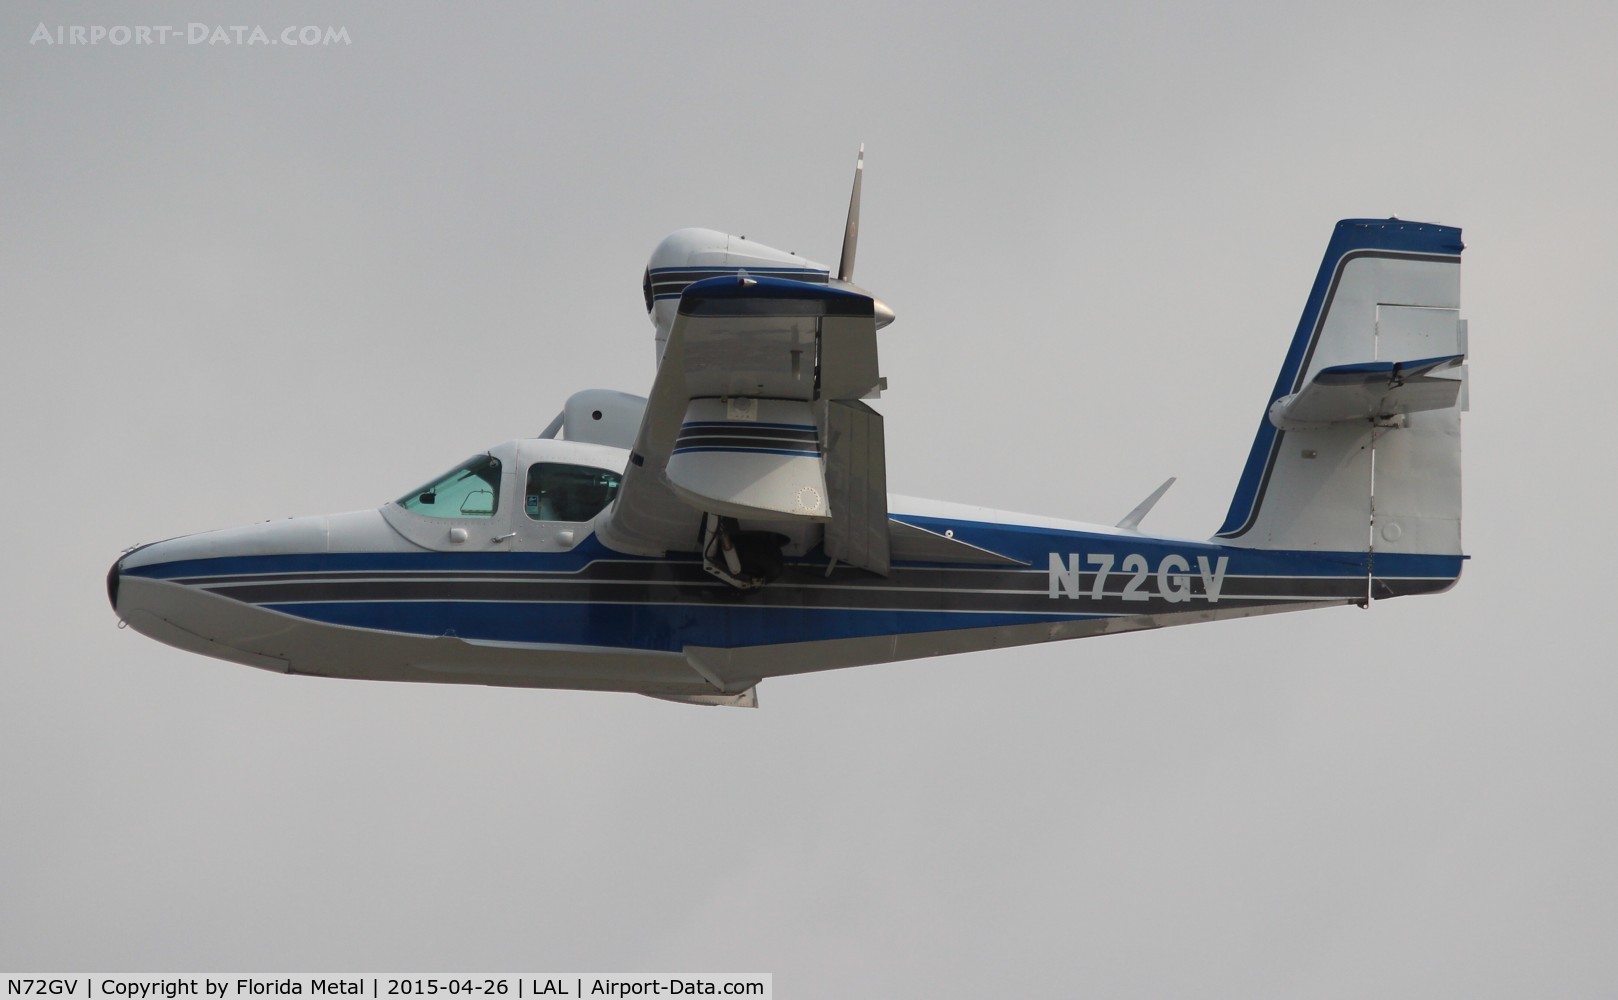 N72GV, Consolidated Aeronautics Inc. LAKE LA-4-200 C/N 1044, Lake LA-4-200